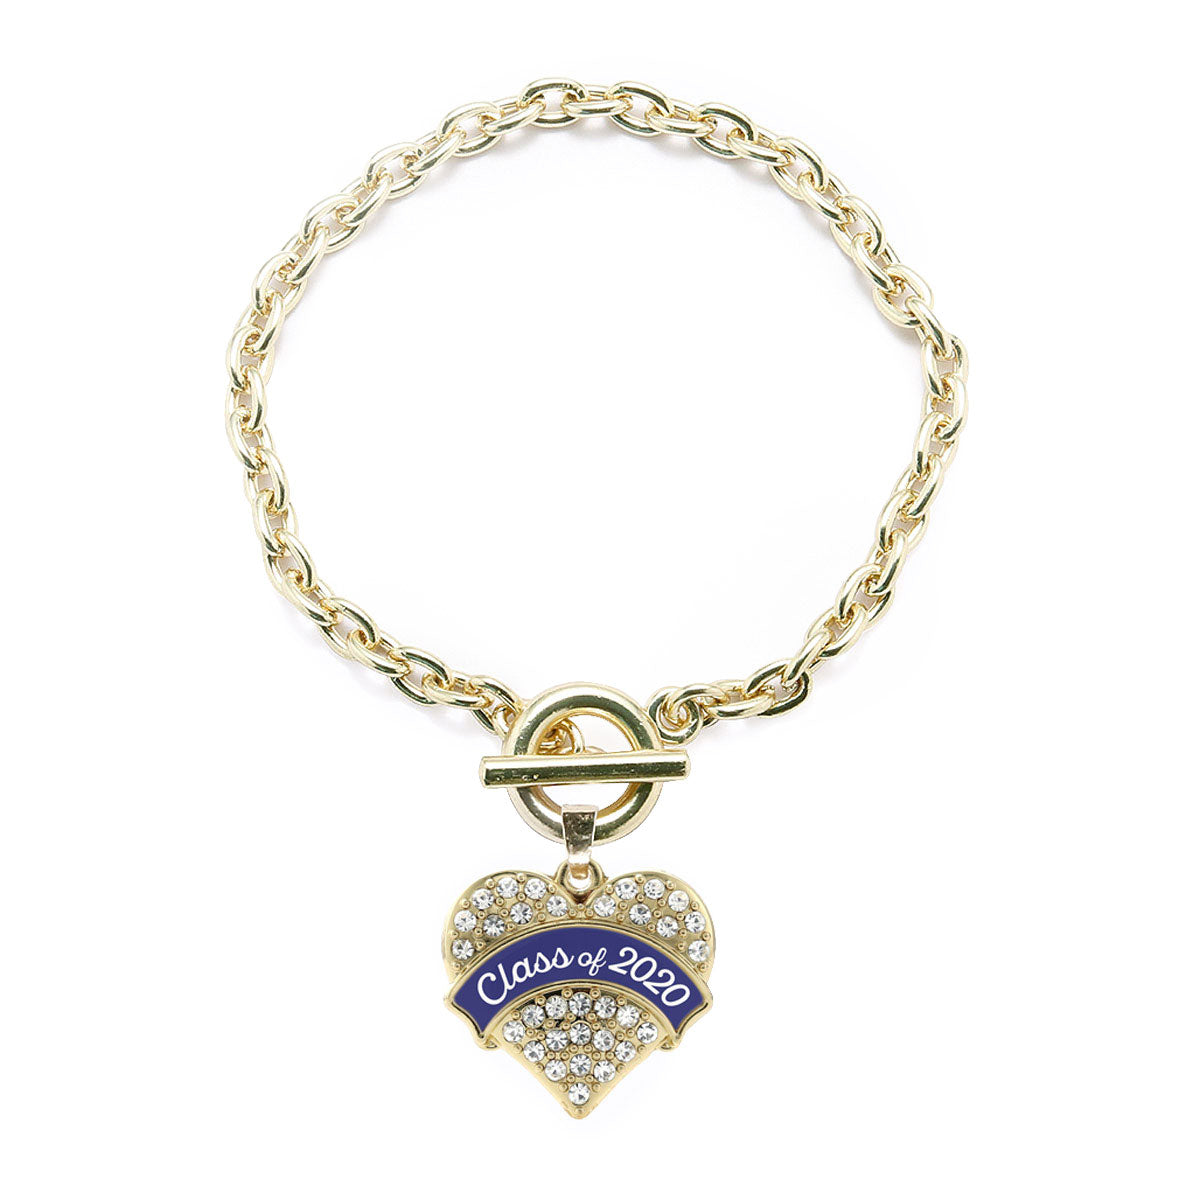 Gold Class of 2020 - Navy Pave Heart Charm Toggle Bracelet